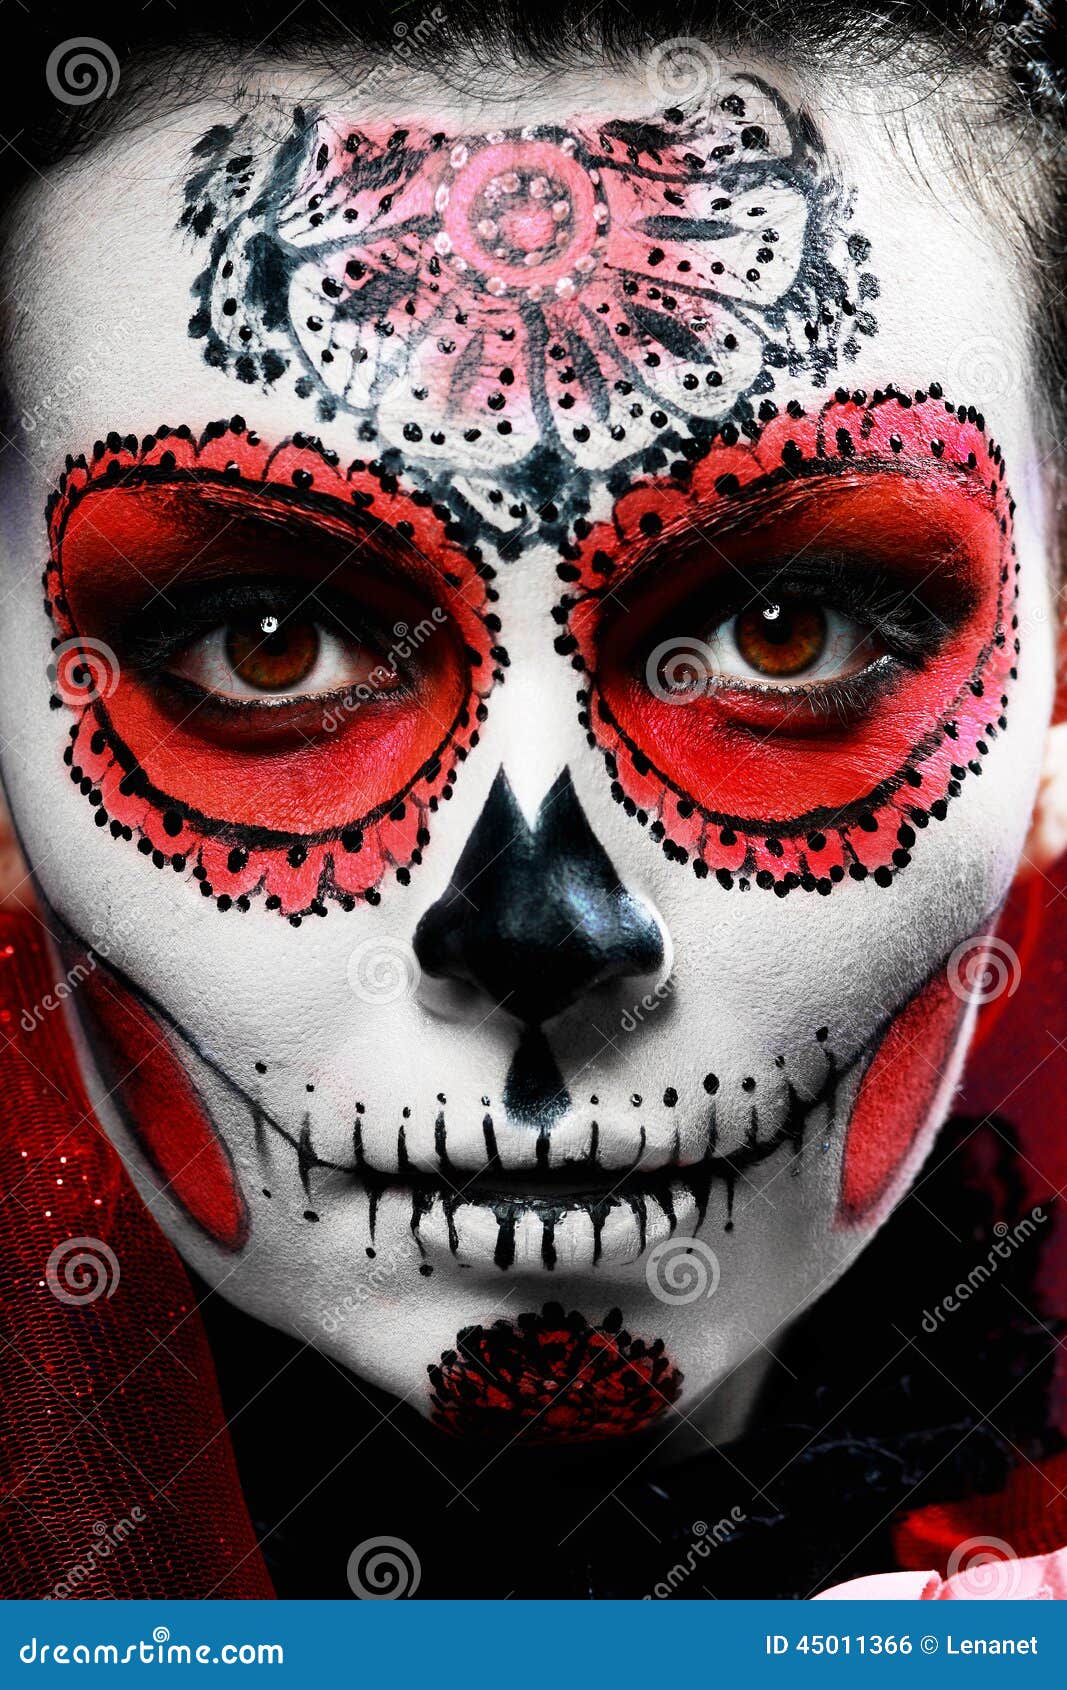 Halloween Make Up Sugar Skull Stock Photo - Image: 45011366